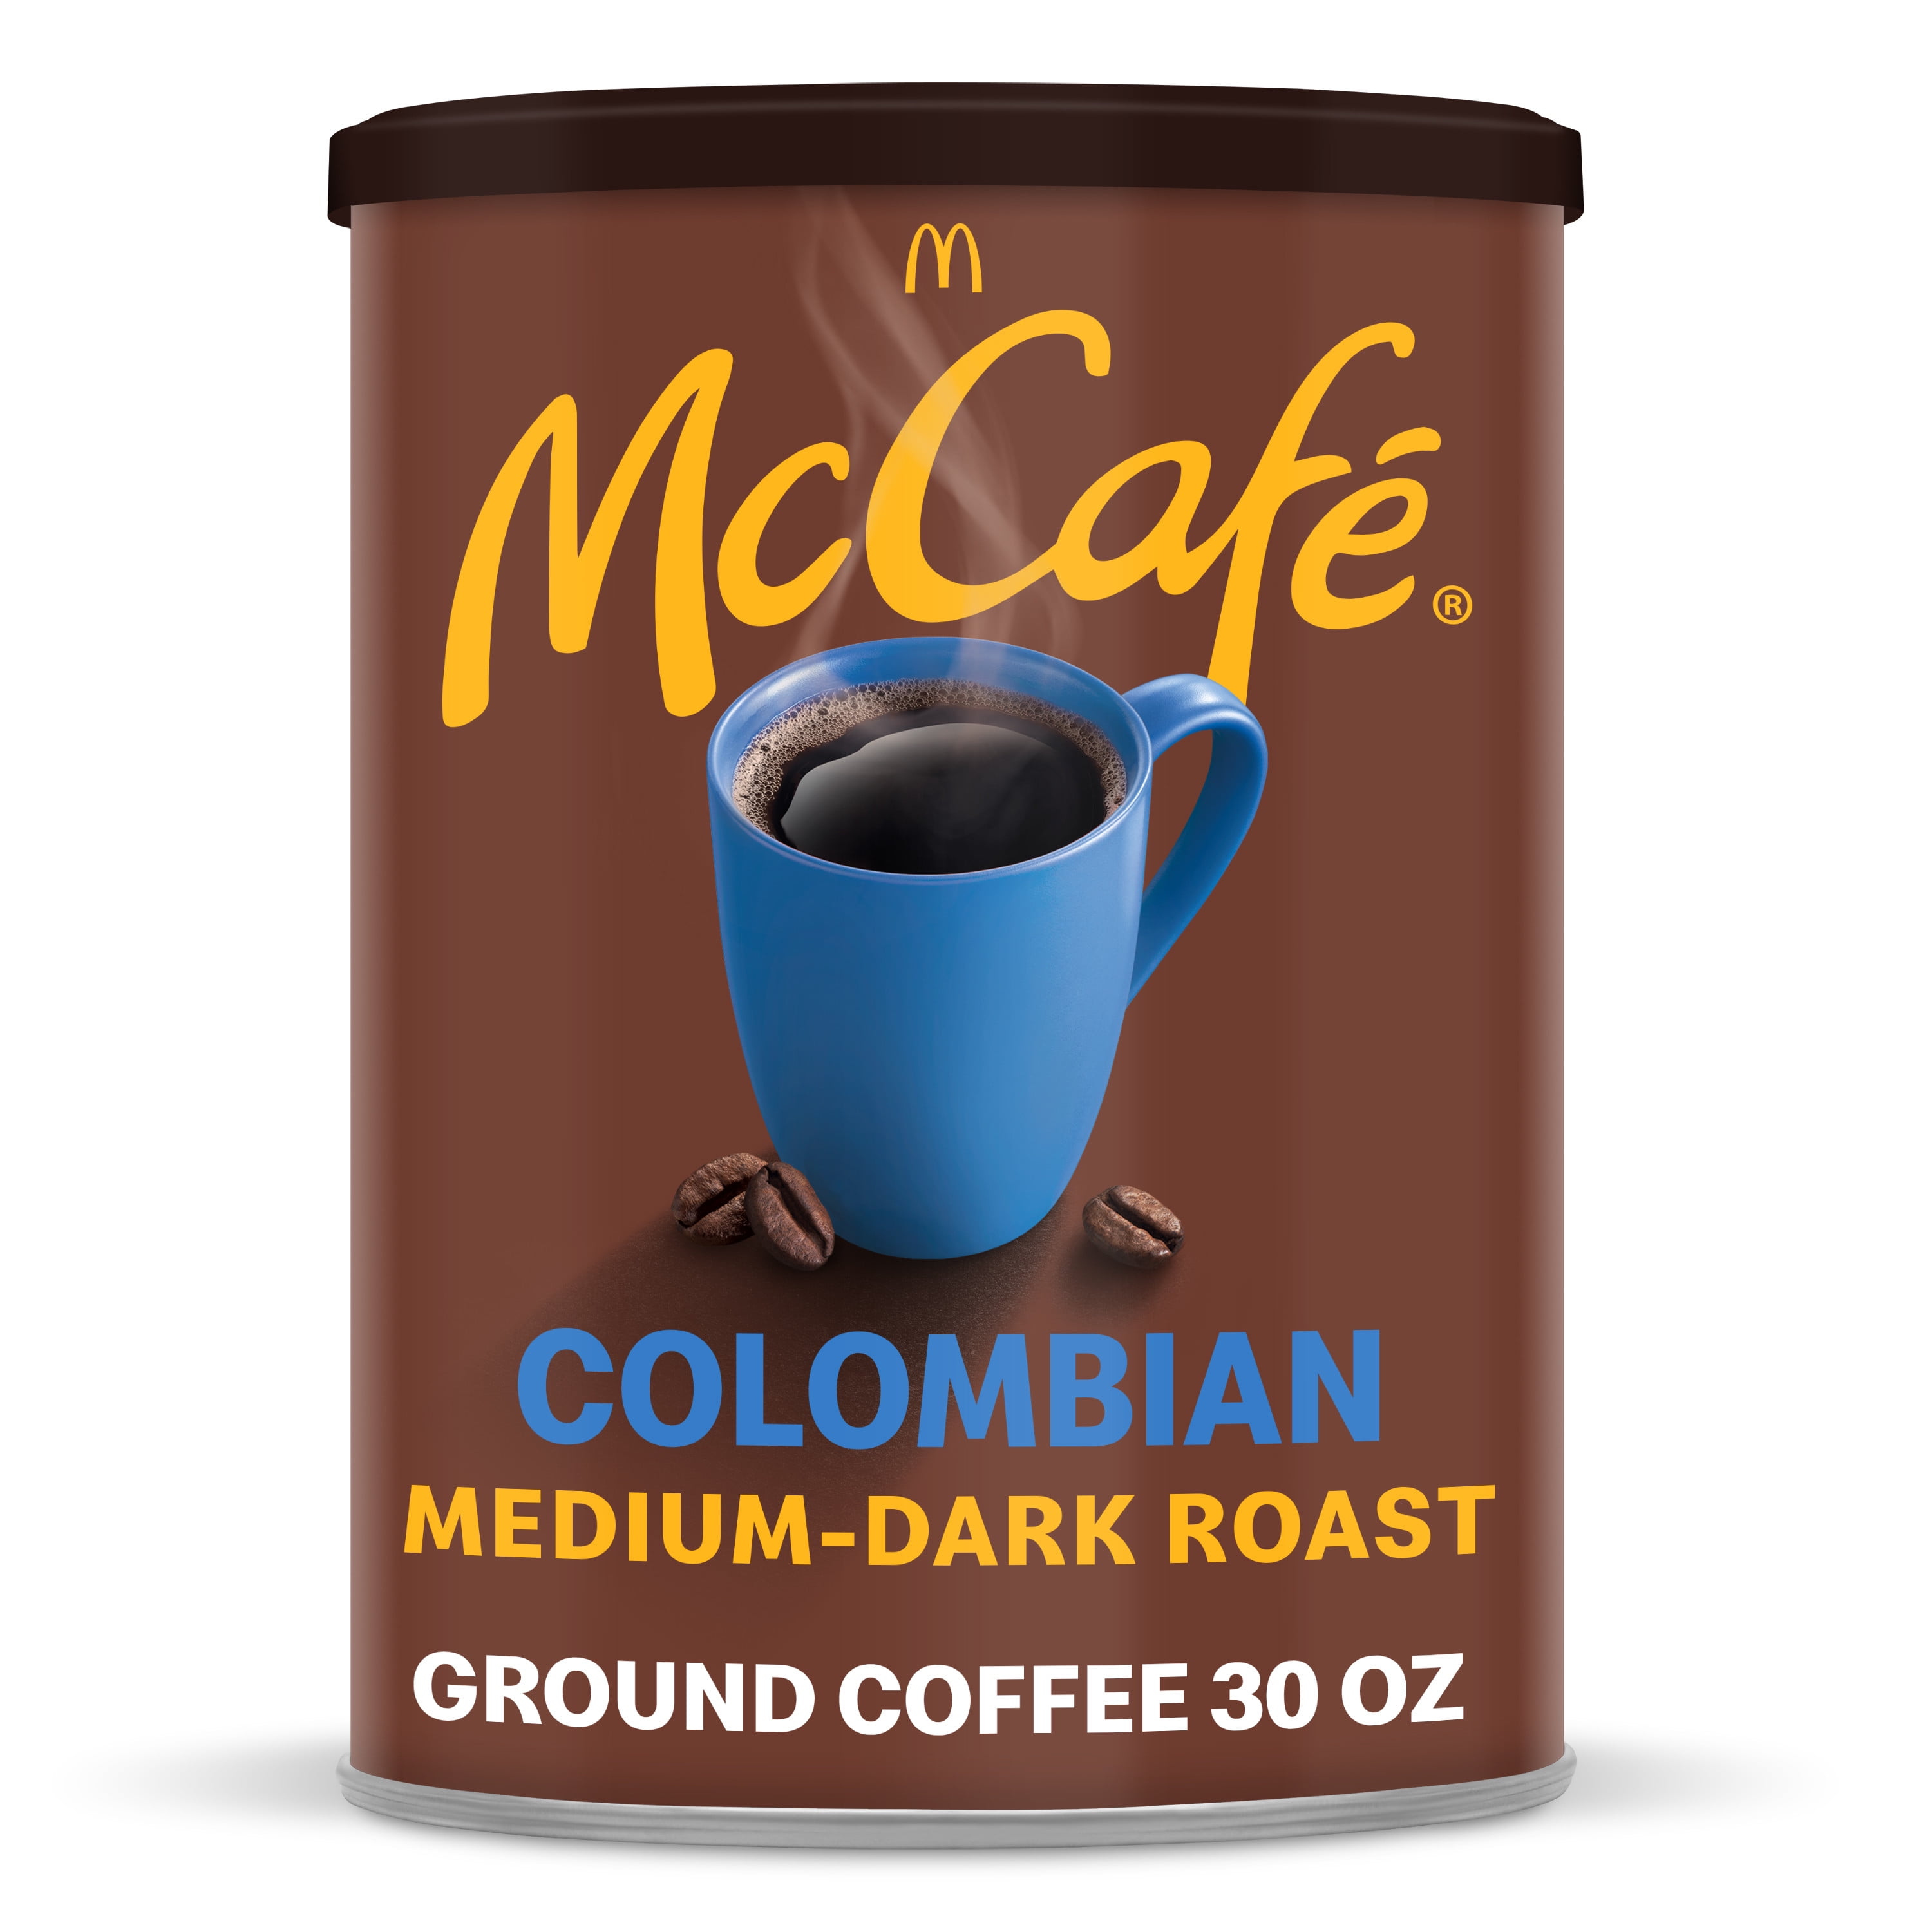 McCafe Colombian, Medium-Dark Roast, Ground Coffee, 30 oz